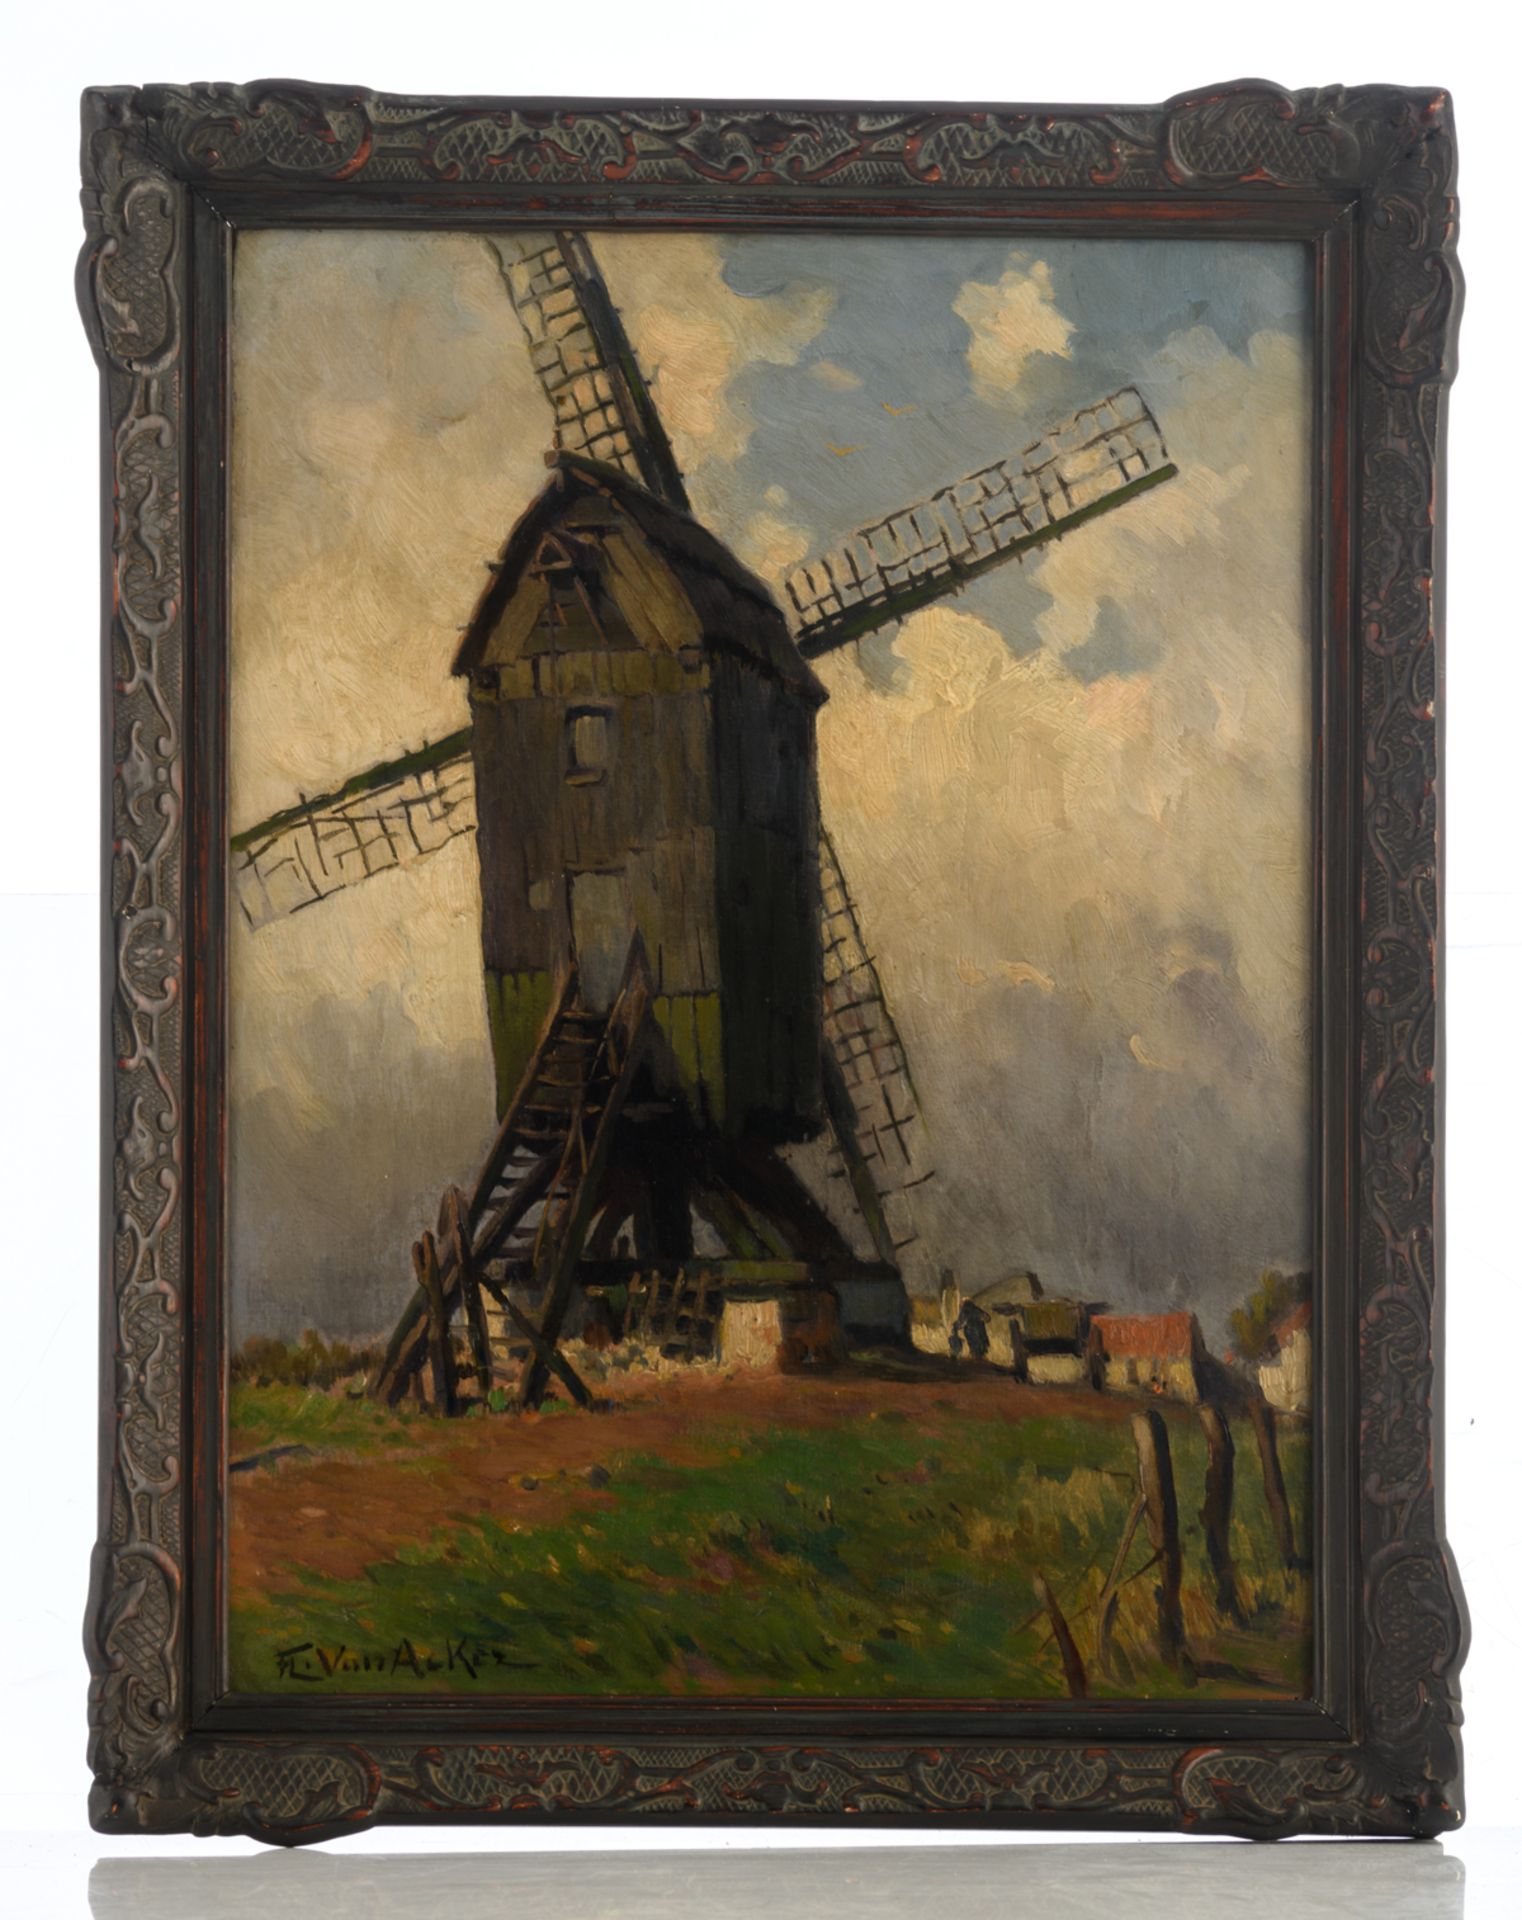 Van Acker Fl., 'De Oude Molen' (an old mill in a Flemish landscape), oil on canvas, 38,5 x 51,5 cm - Bild 2 aus 5